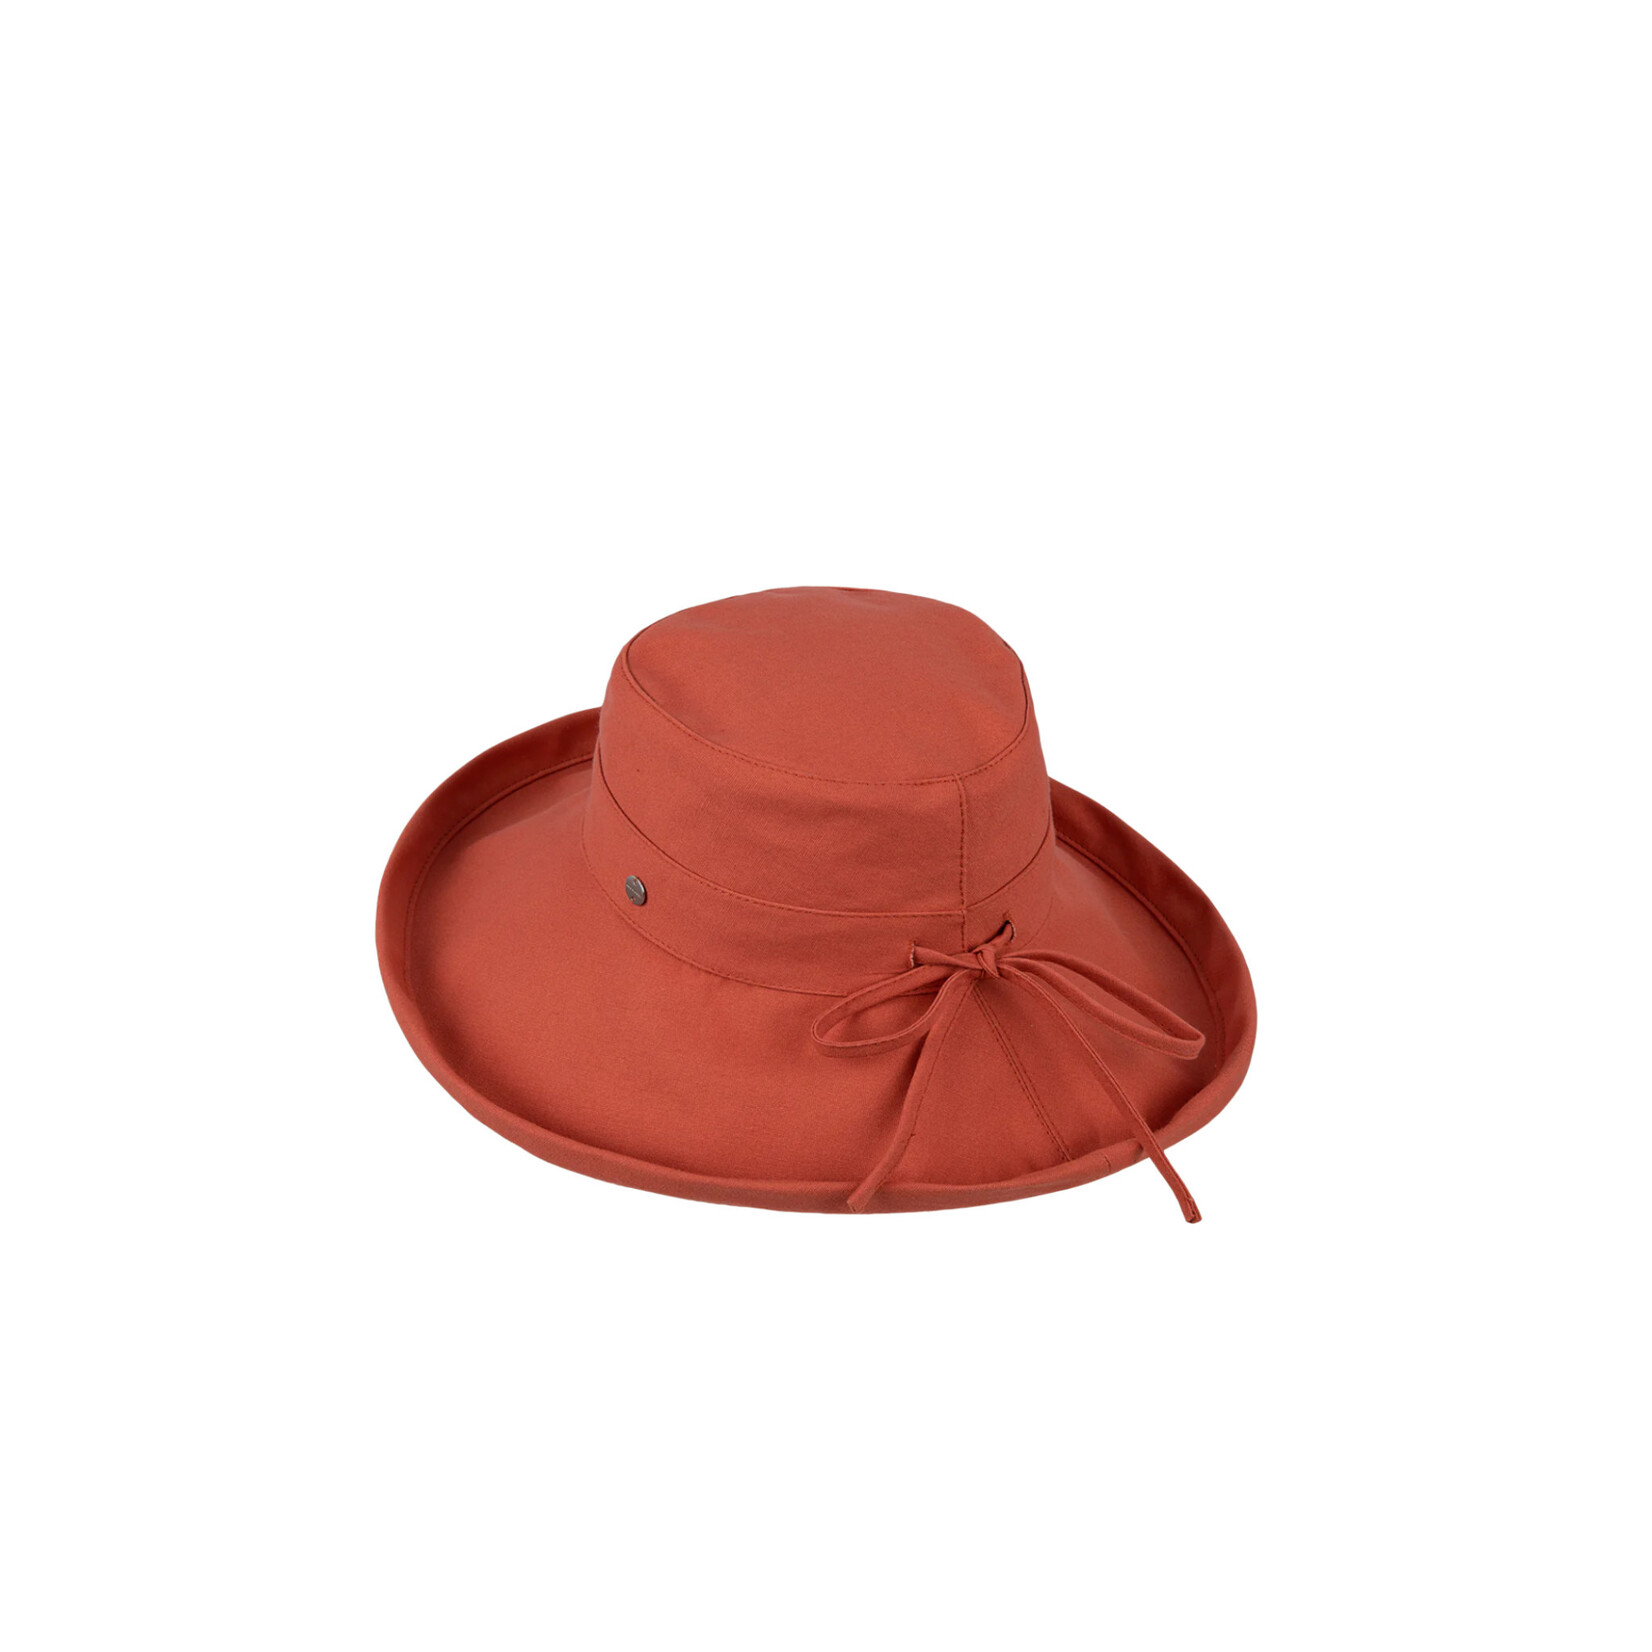 Kooringal Noosa Upturn Hat in Coral